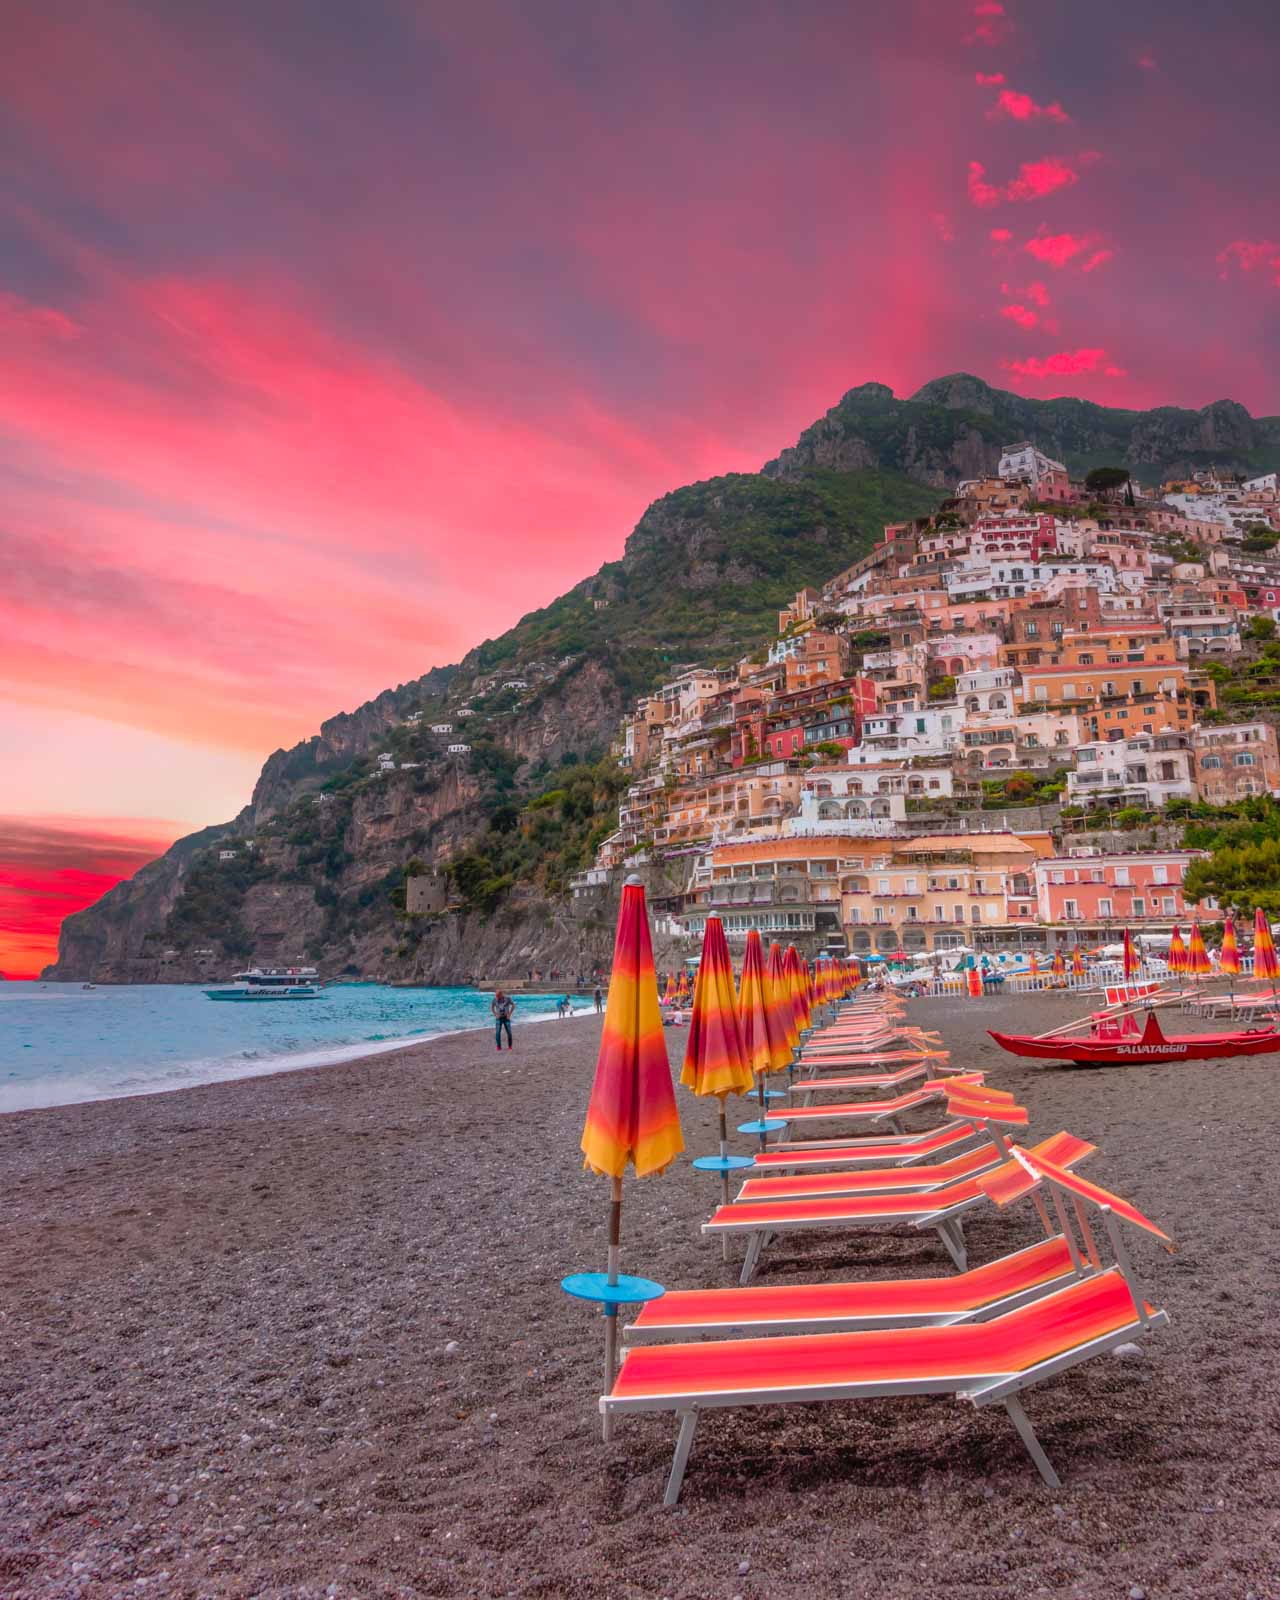 Hotels in Positano Amalfi Coast